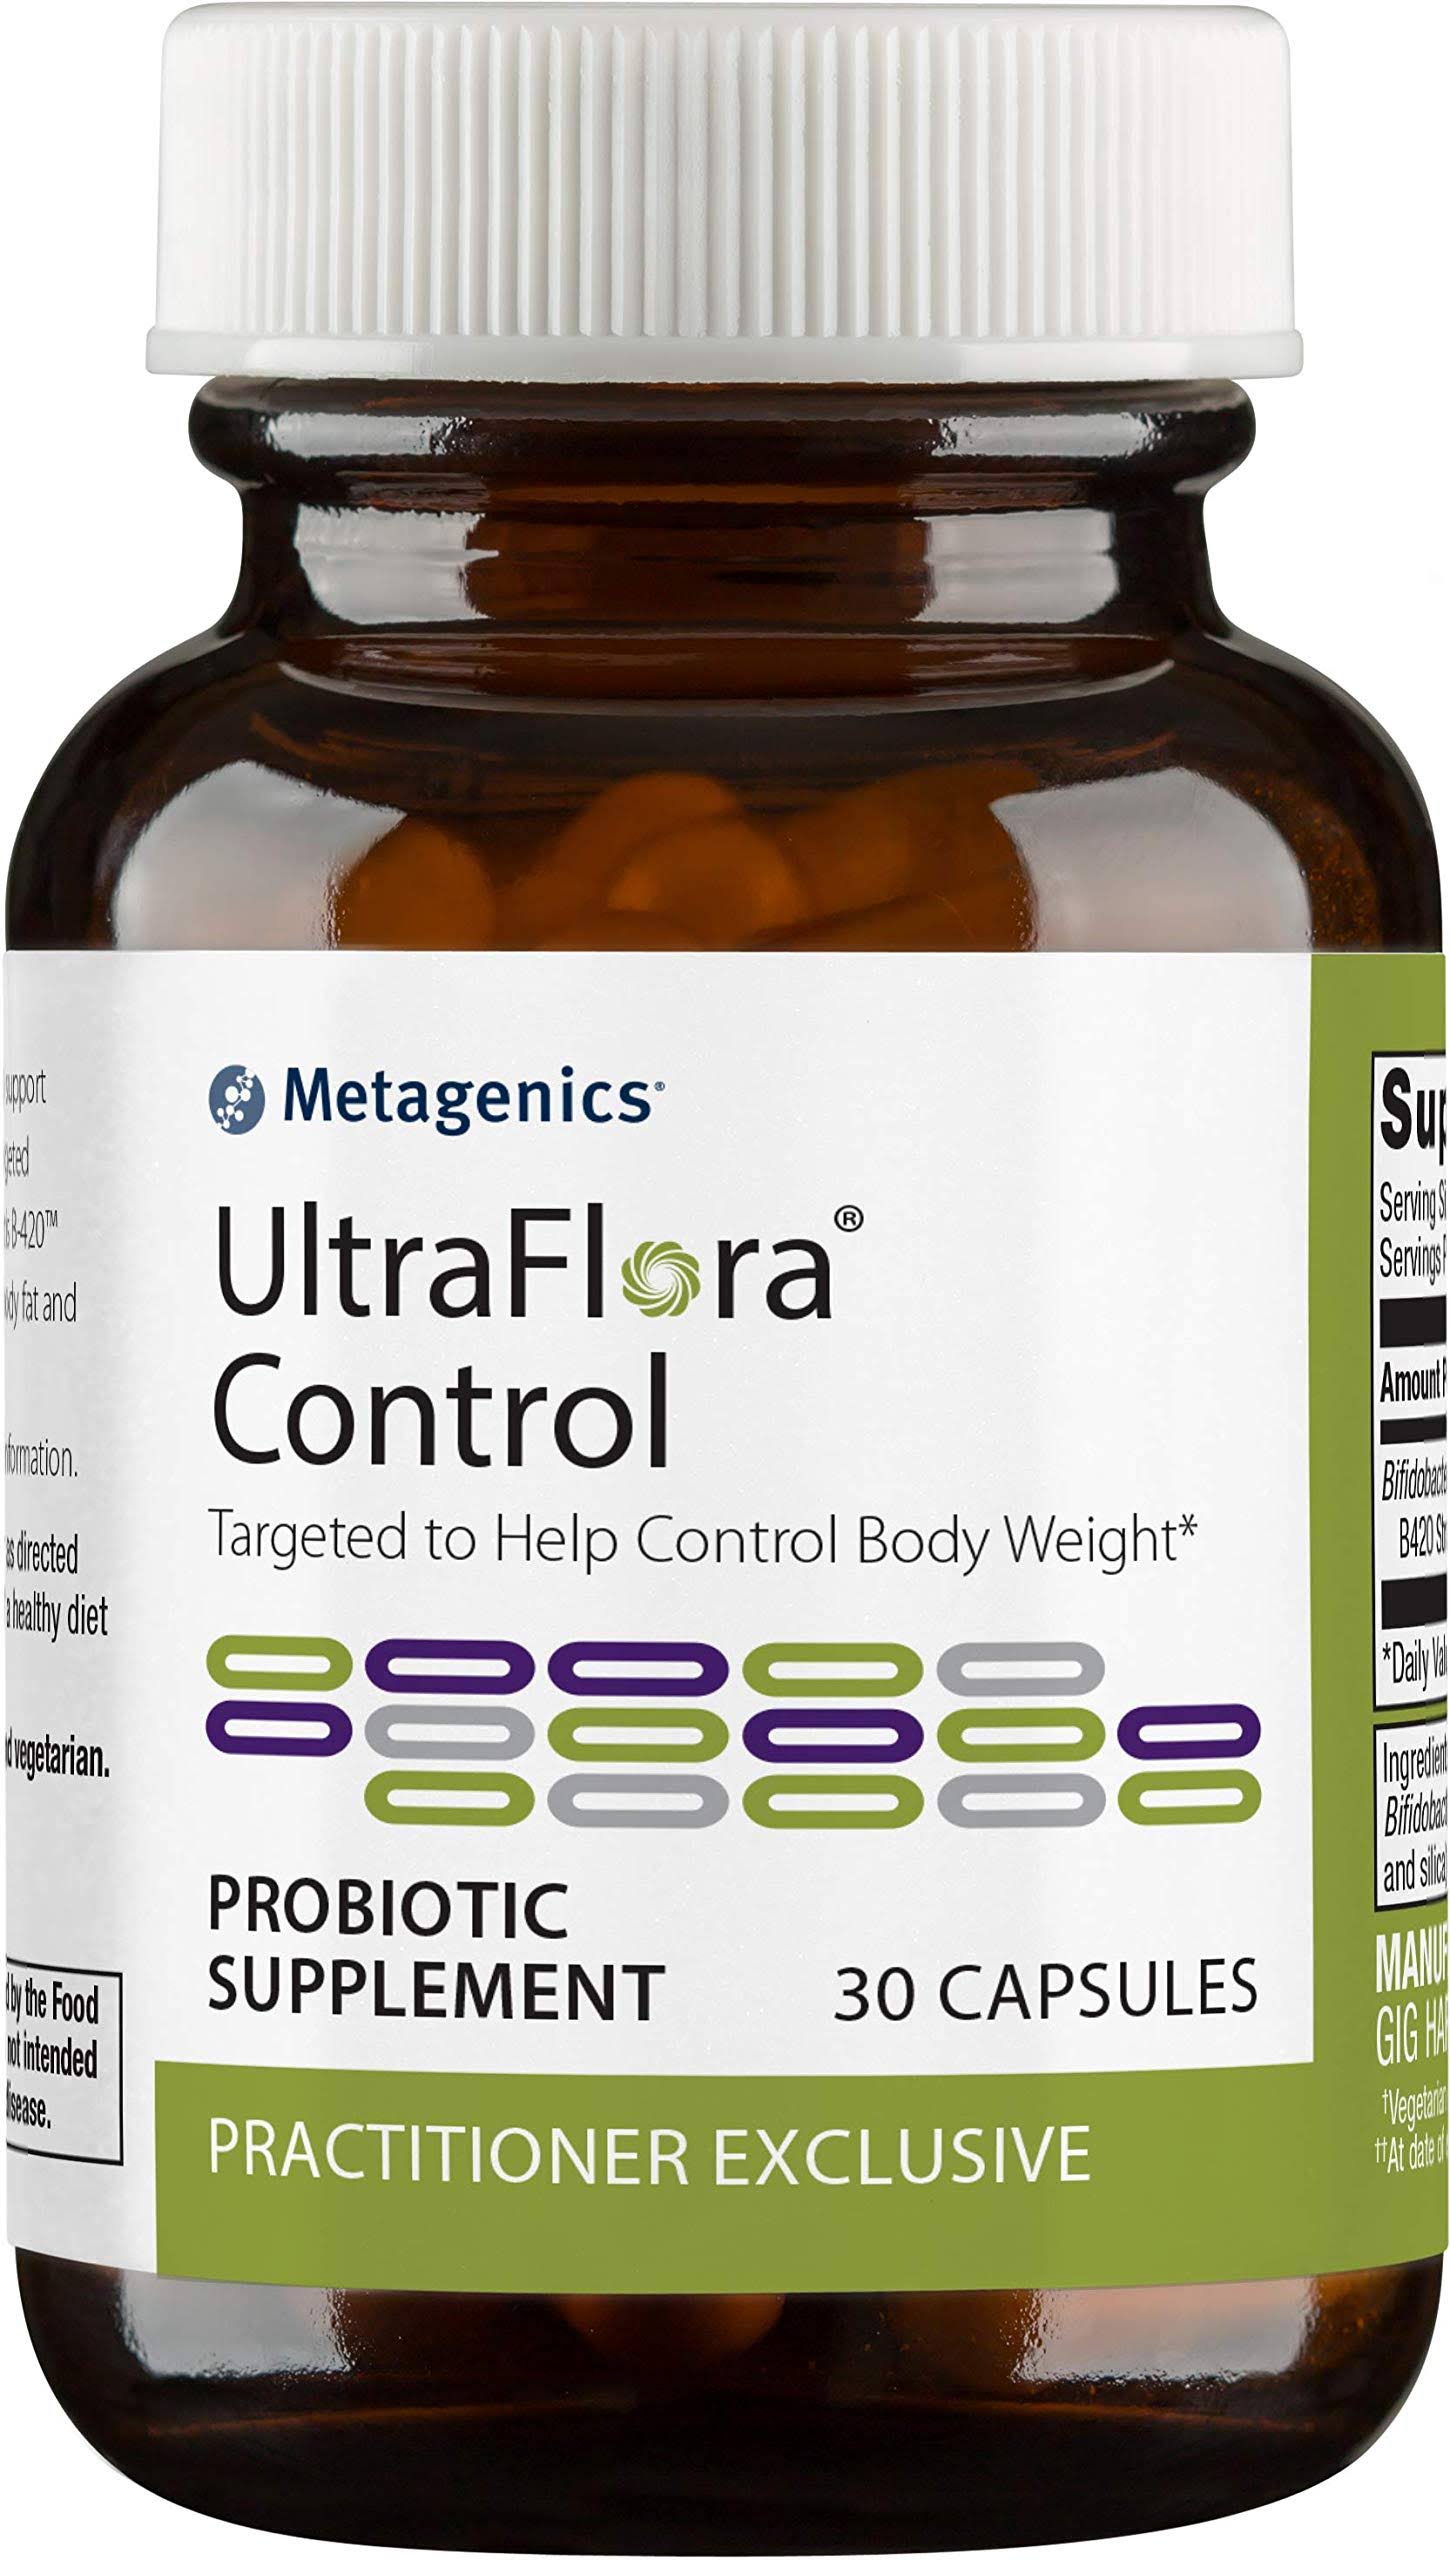 Metagenics Ultraflora Control